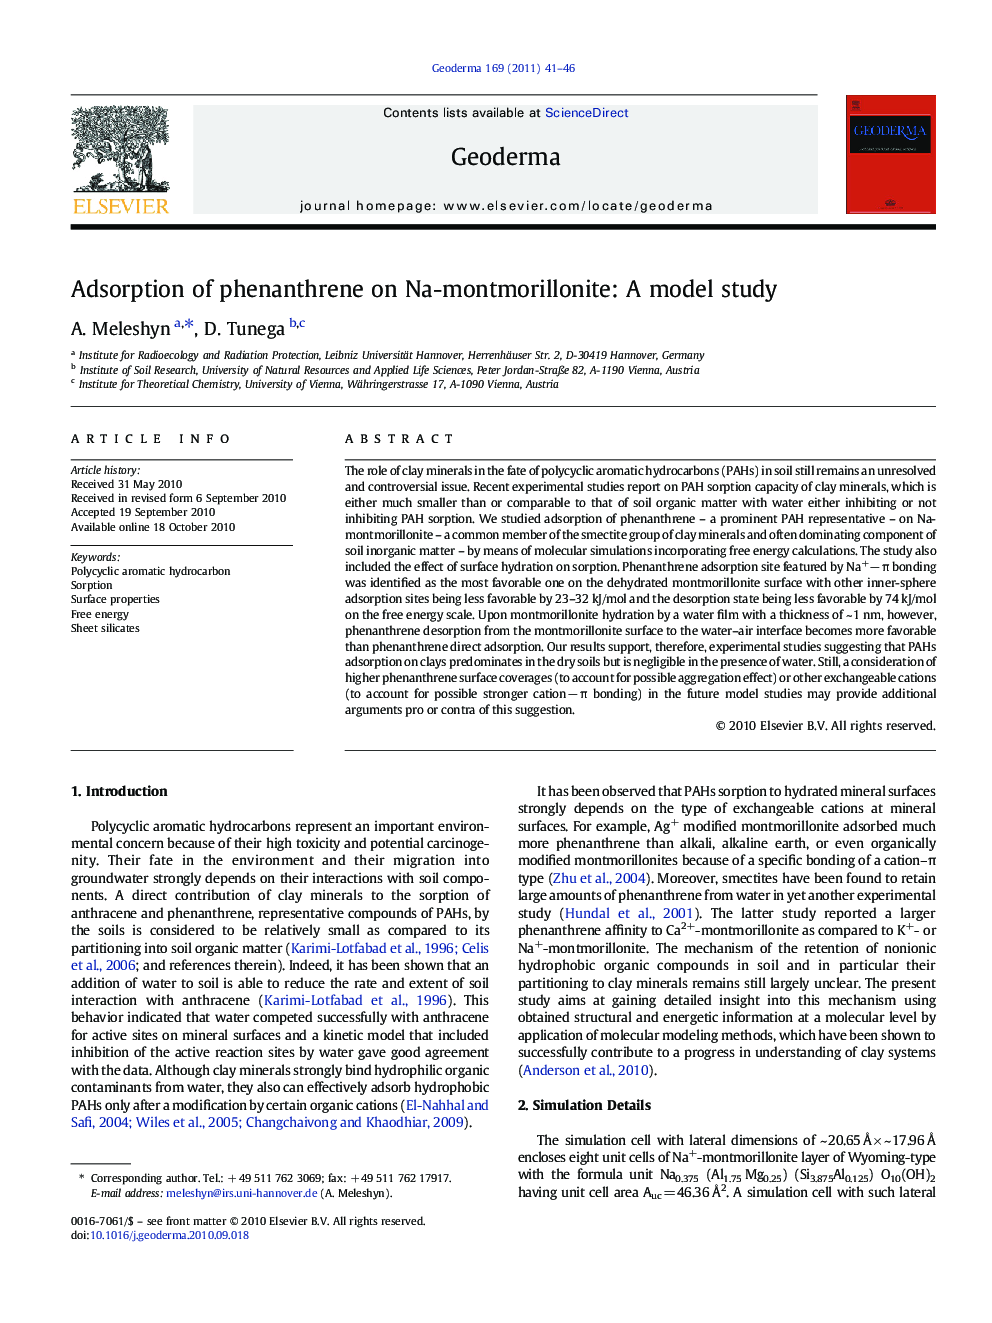 Adsorption of phenanthrene on Na-montmorillonite: A model study